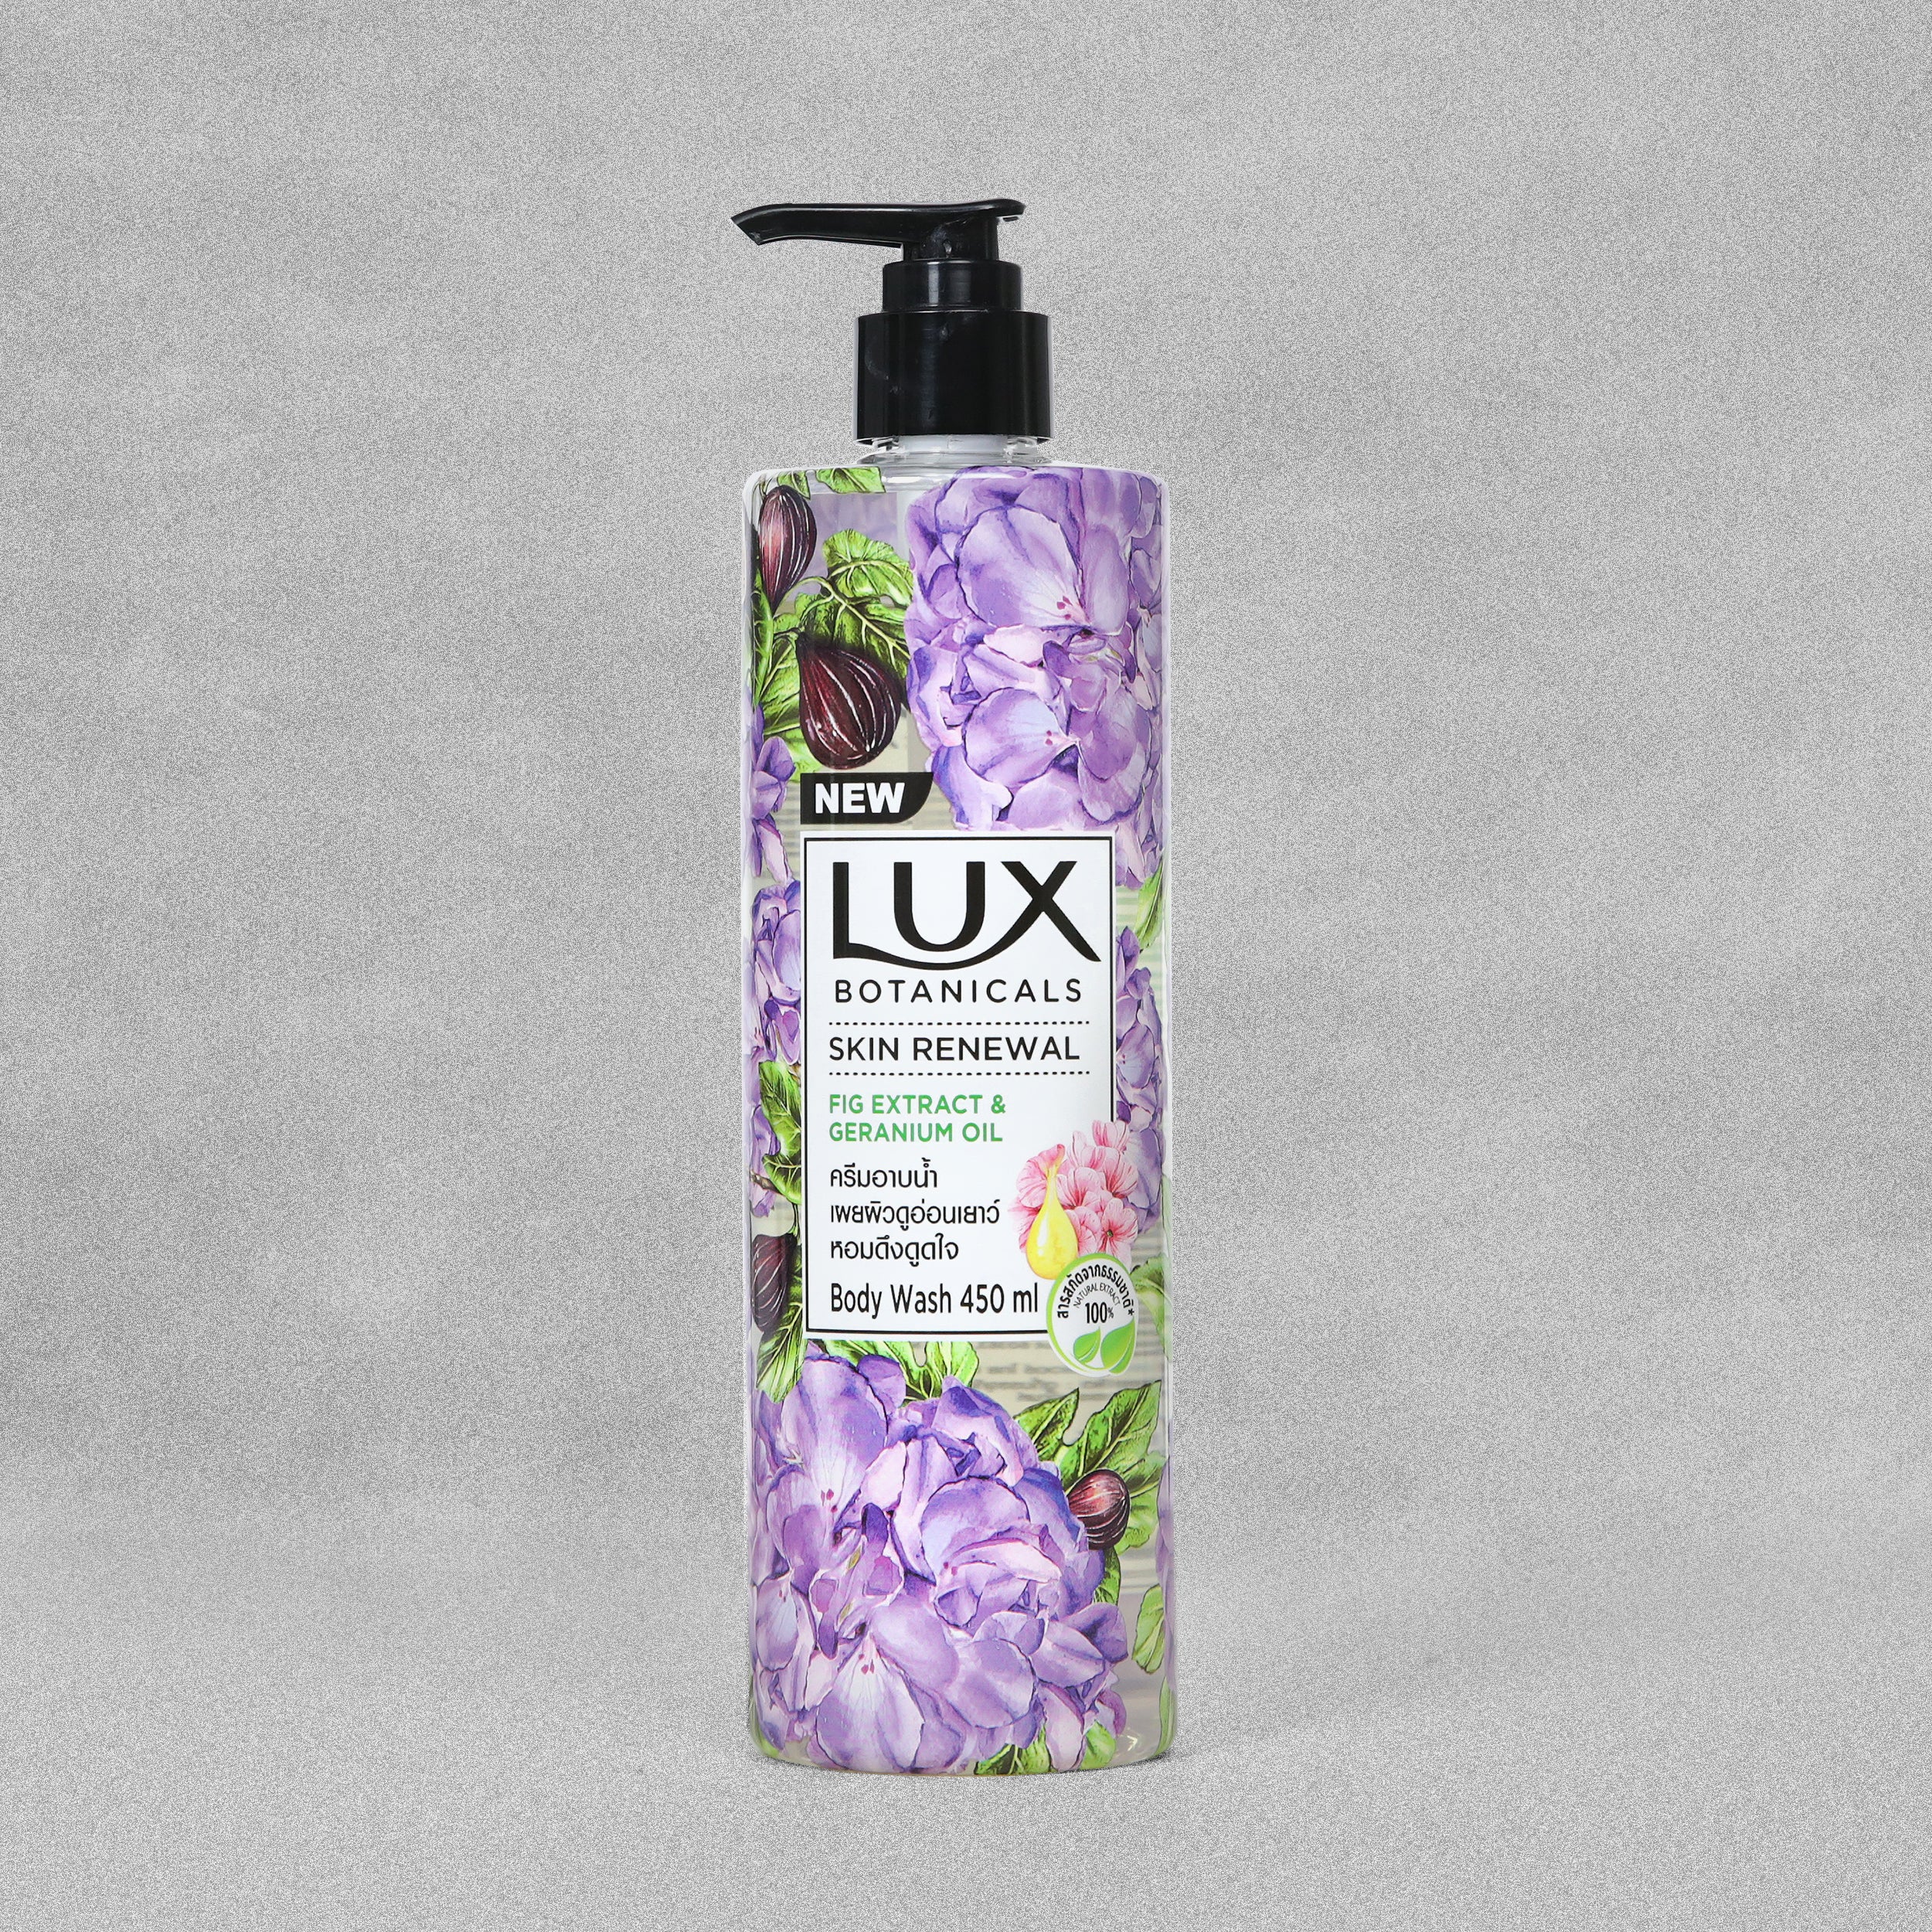 Lux Botanicals Skin Renewal Body Wash 450ml - Fig Extract & Geranium Oil